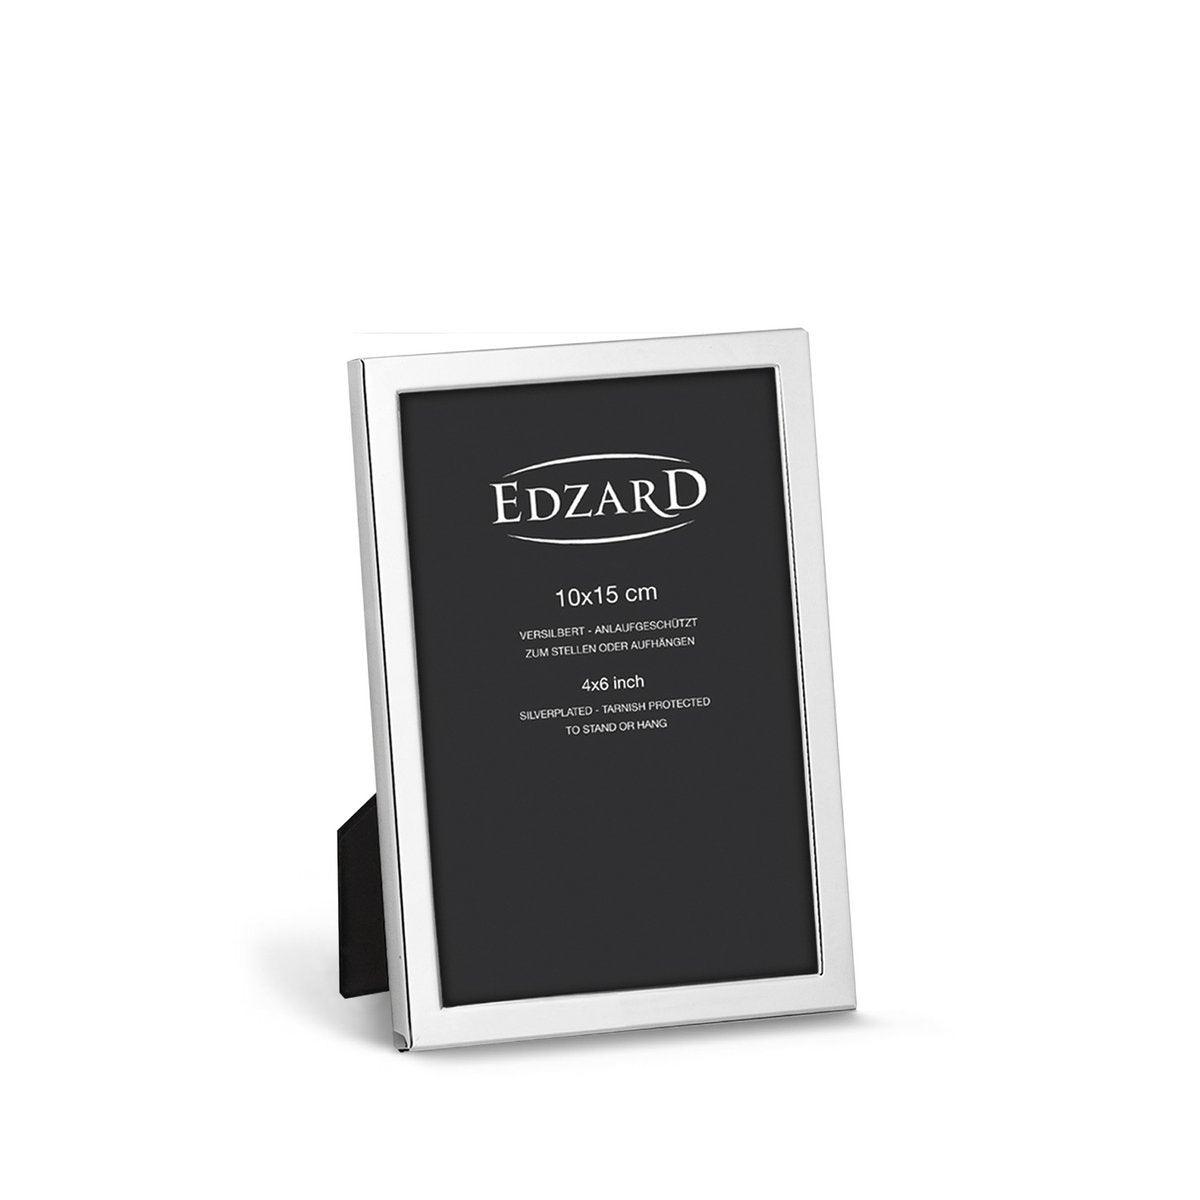 EDZARD Fotorahmen Bergamo, für Foto 10 x 15 cm, edel versilbert, anlaufgeschützt - HomeDesign Knaus